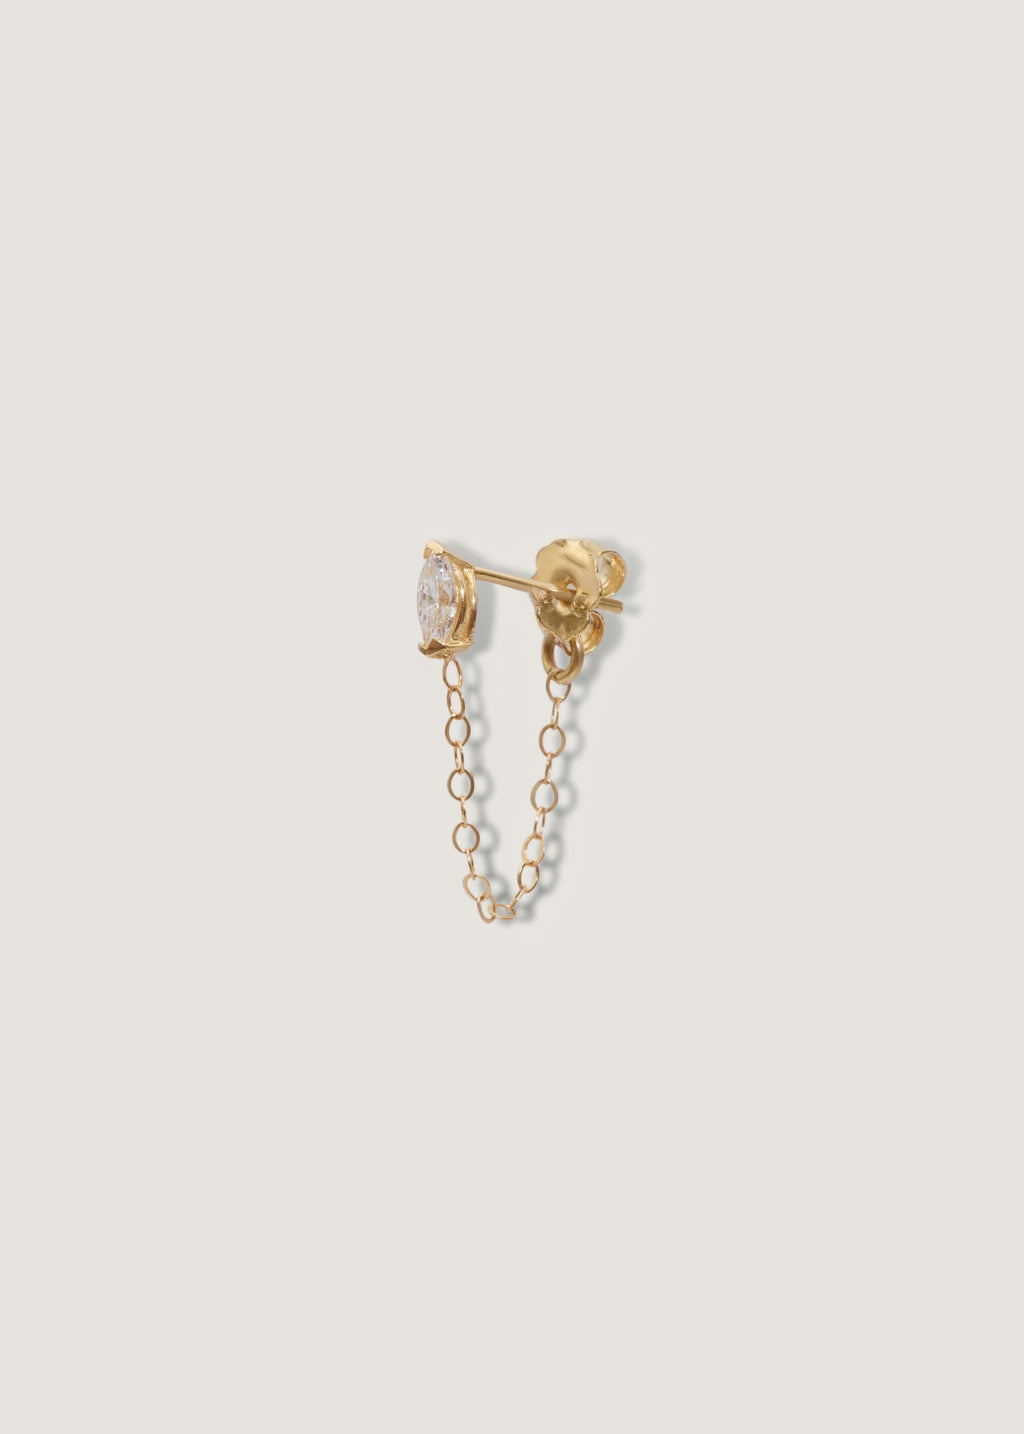 alt="Marquise Chain Earring"